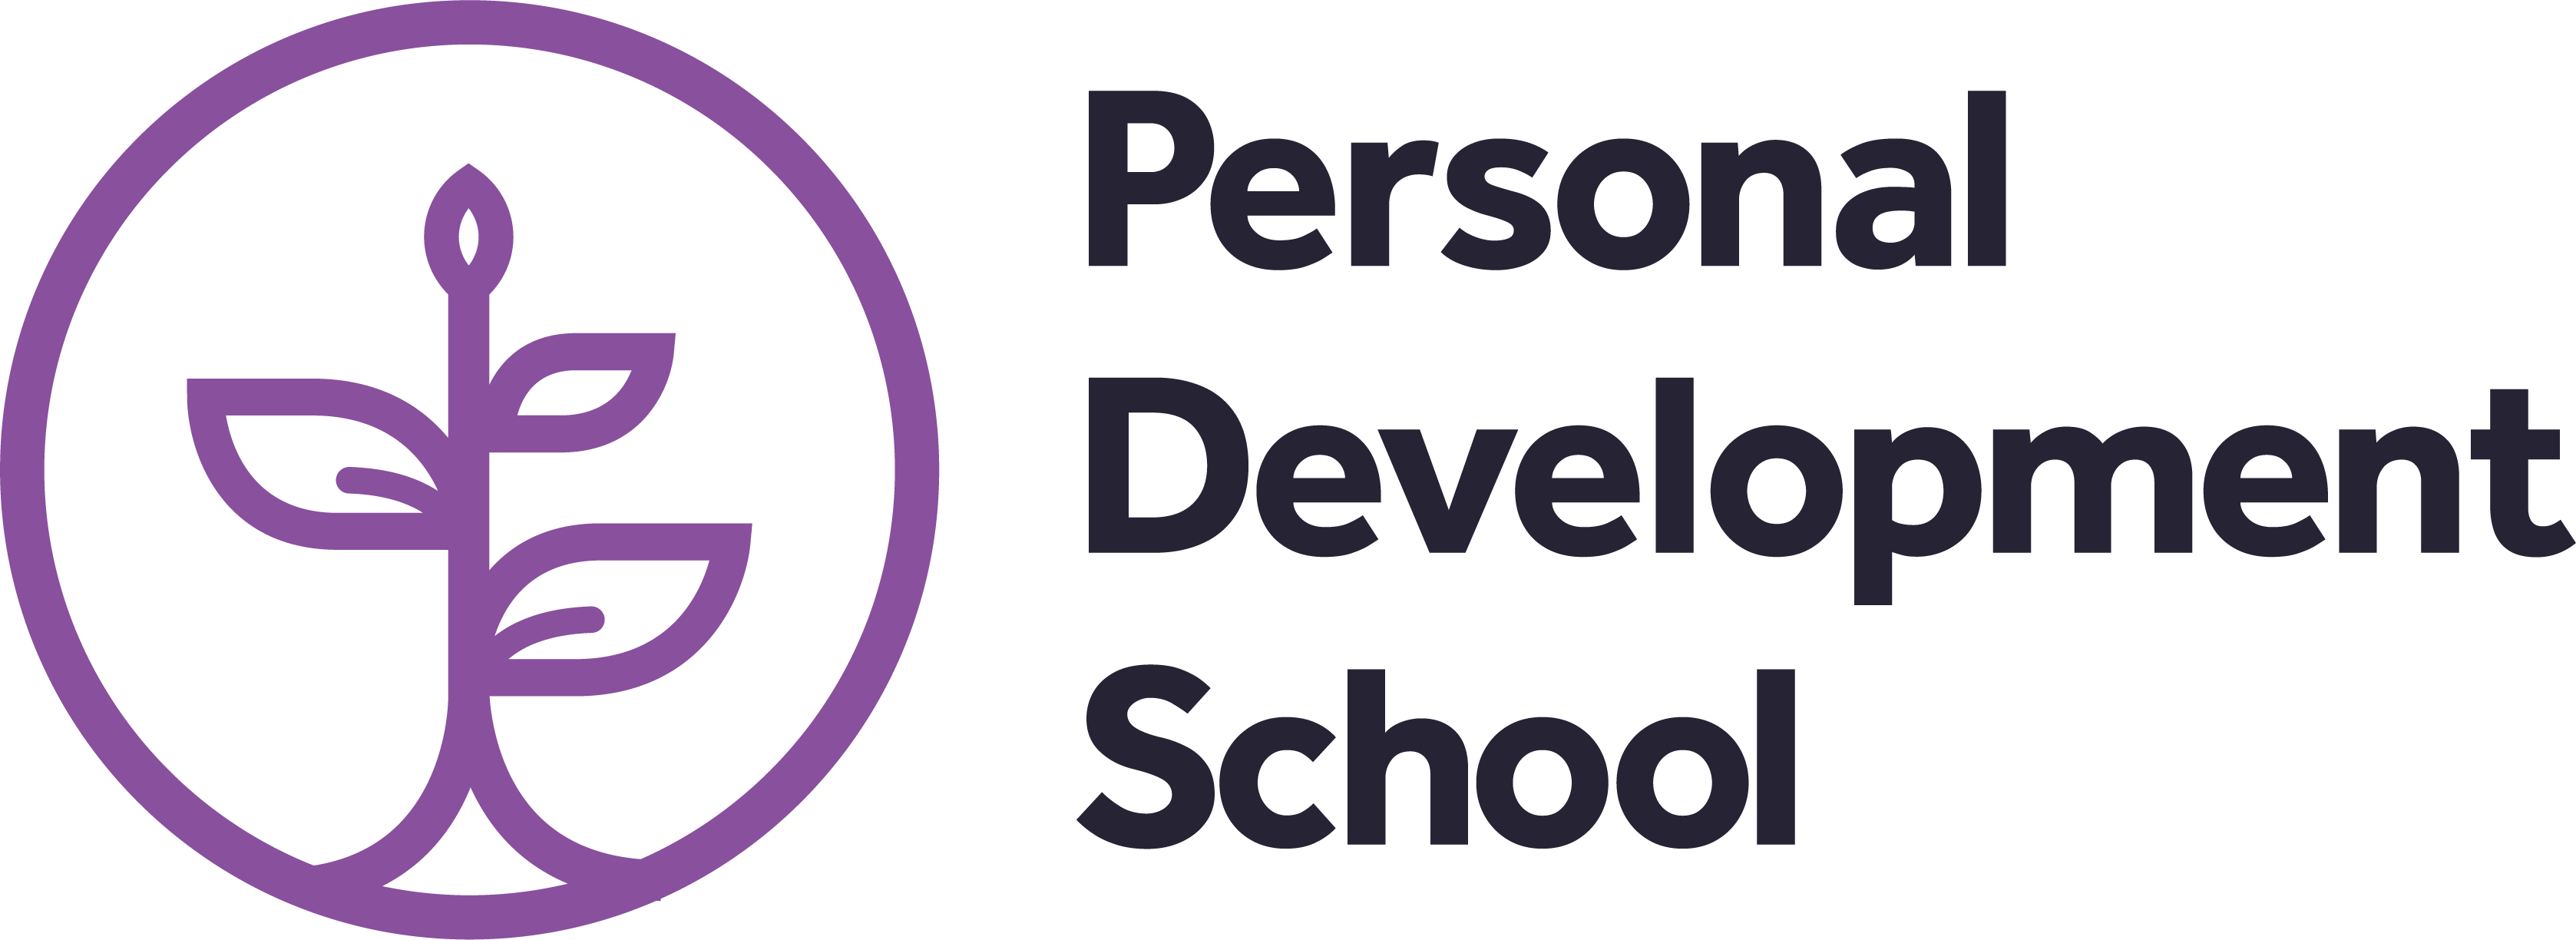 The Personal Development School - Affiliate Program